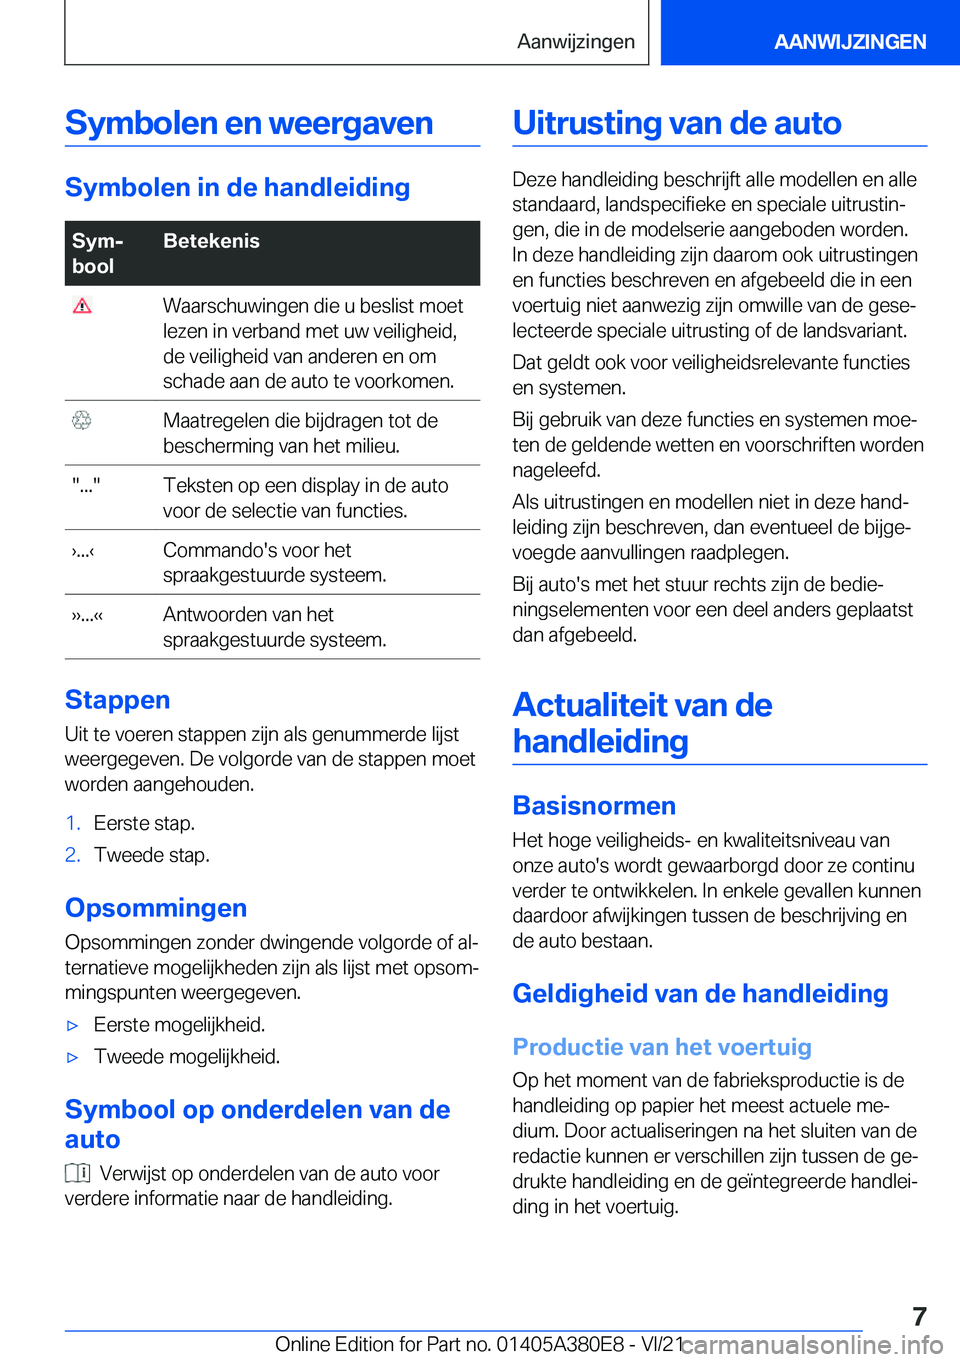 BMW 5 SERIES 2022  Instructieboekjes (in Dutch) �S�y�m�b�o�l�e�n��e�n��w�e�e�r�g�a�v�e�n
�S�y�m�b�o�l�e�n��i�n��d�e��h�a�n�d�l�e�i�d�i�n�g
�S�y�mj
�b�o�o�l�B�e�t�e�k�e�n�i�s��W�a�a�r�s�c�h�u�w�i�n�g�e�n��d�i�e��u��b�e�s�l�i�s�t��m�o�e�t
